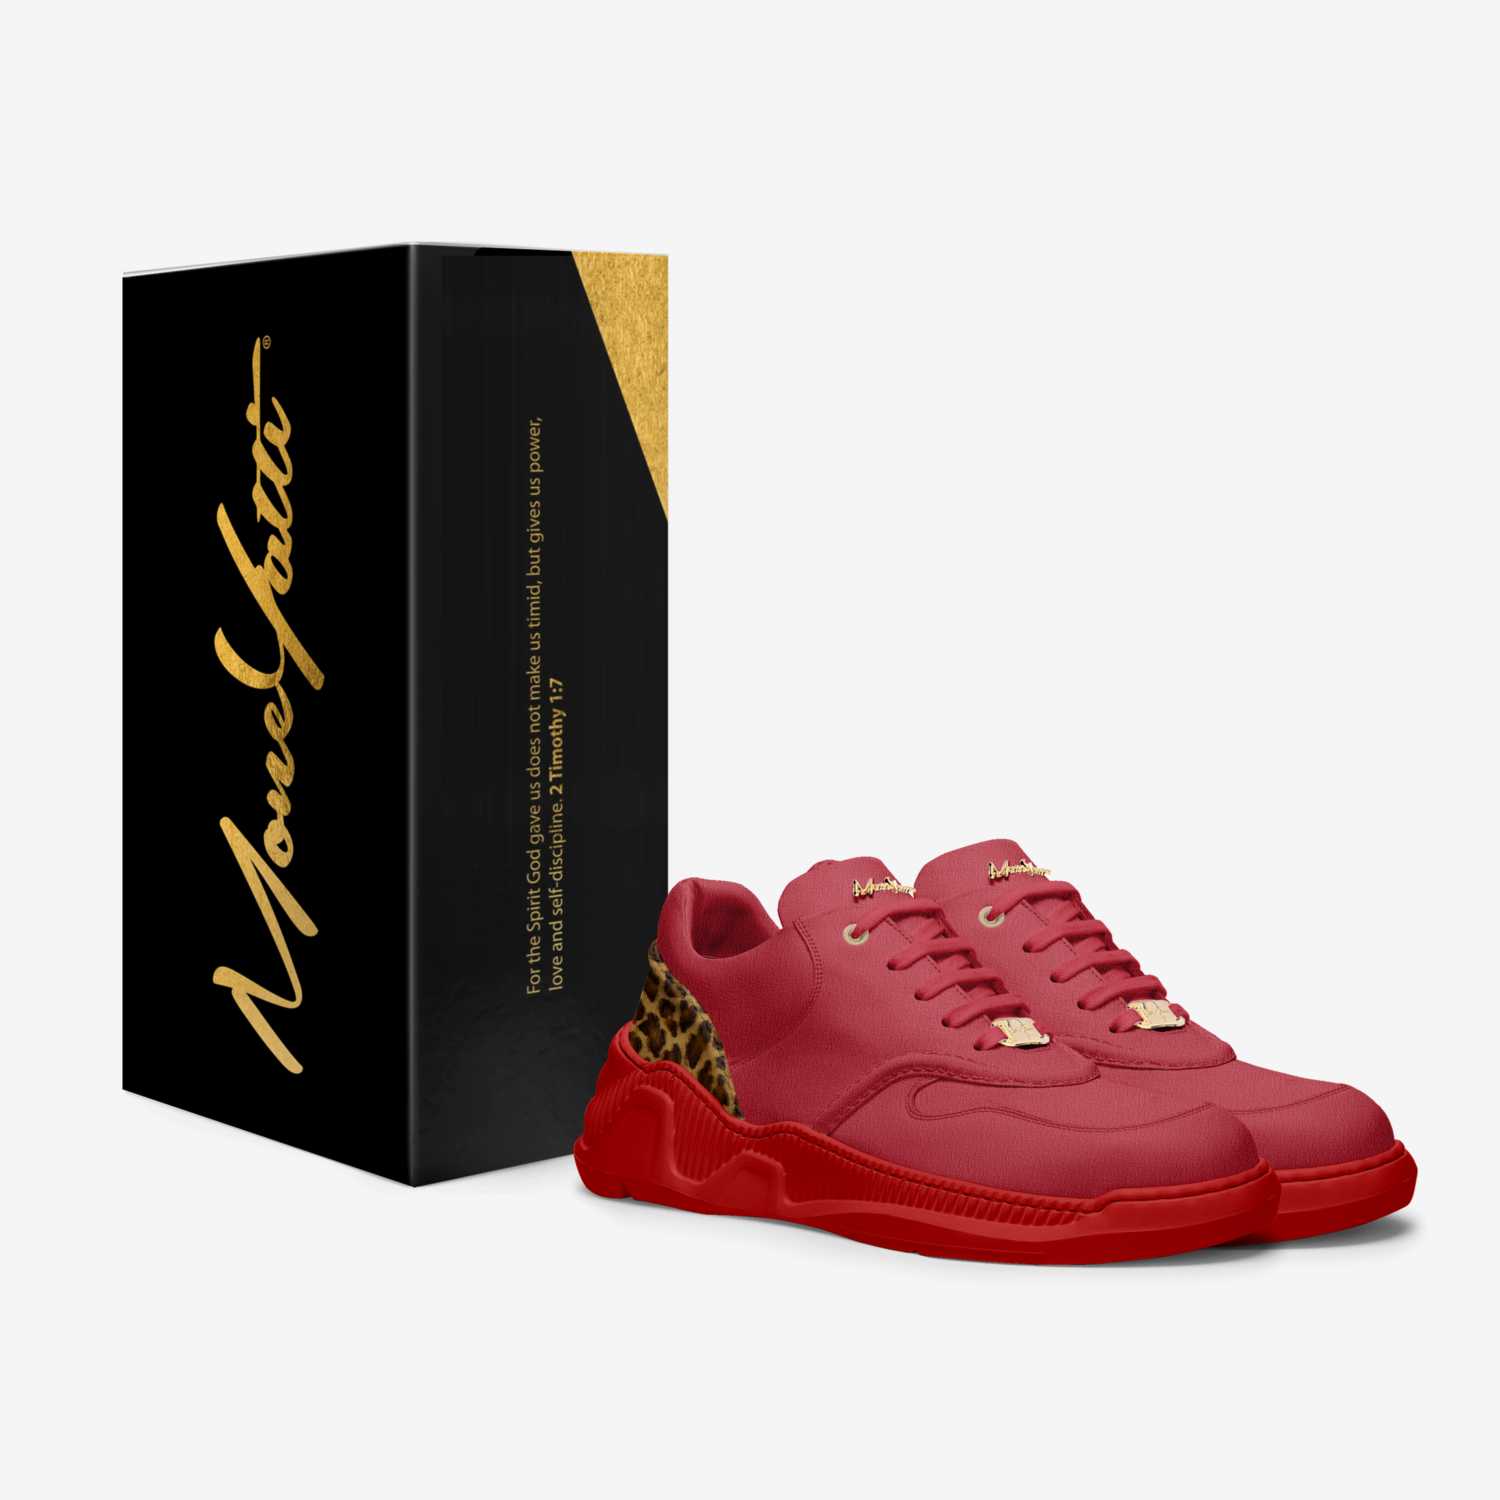 Moneyatti Miller23 custom made in Italy shoes by Moneyatti Brand | Box view